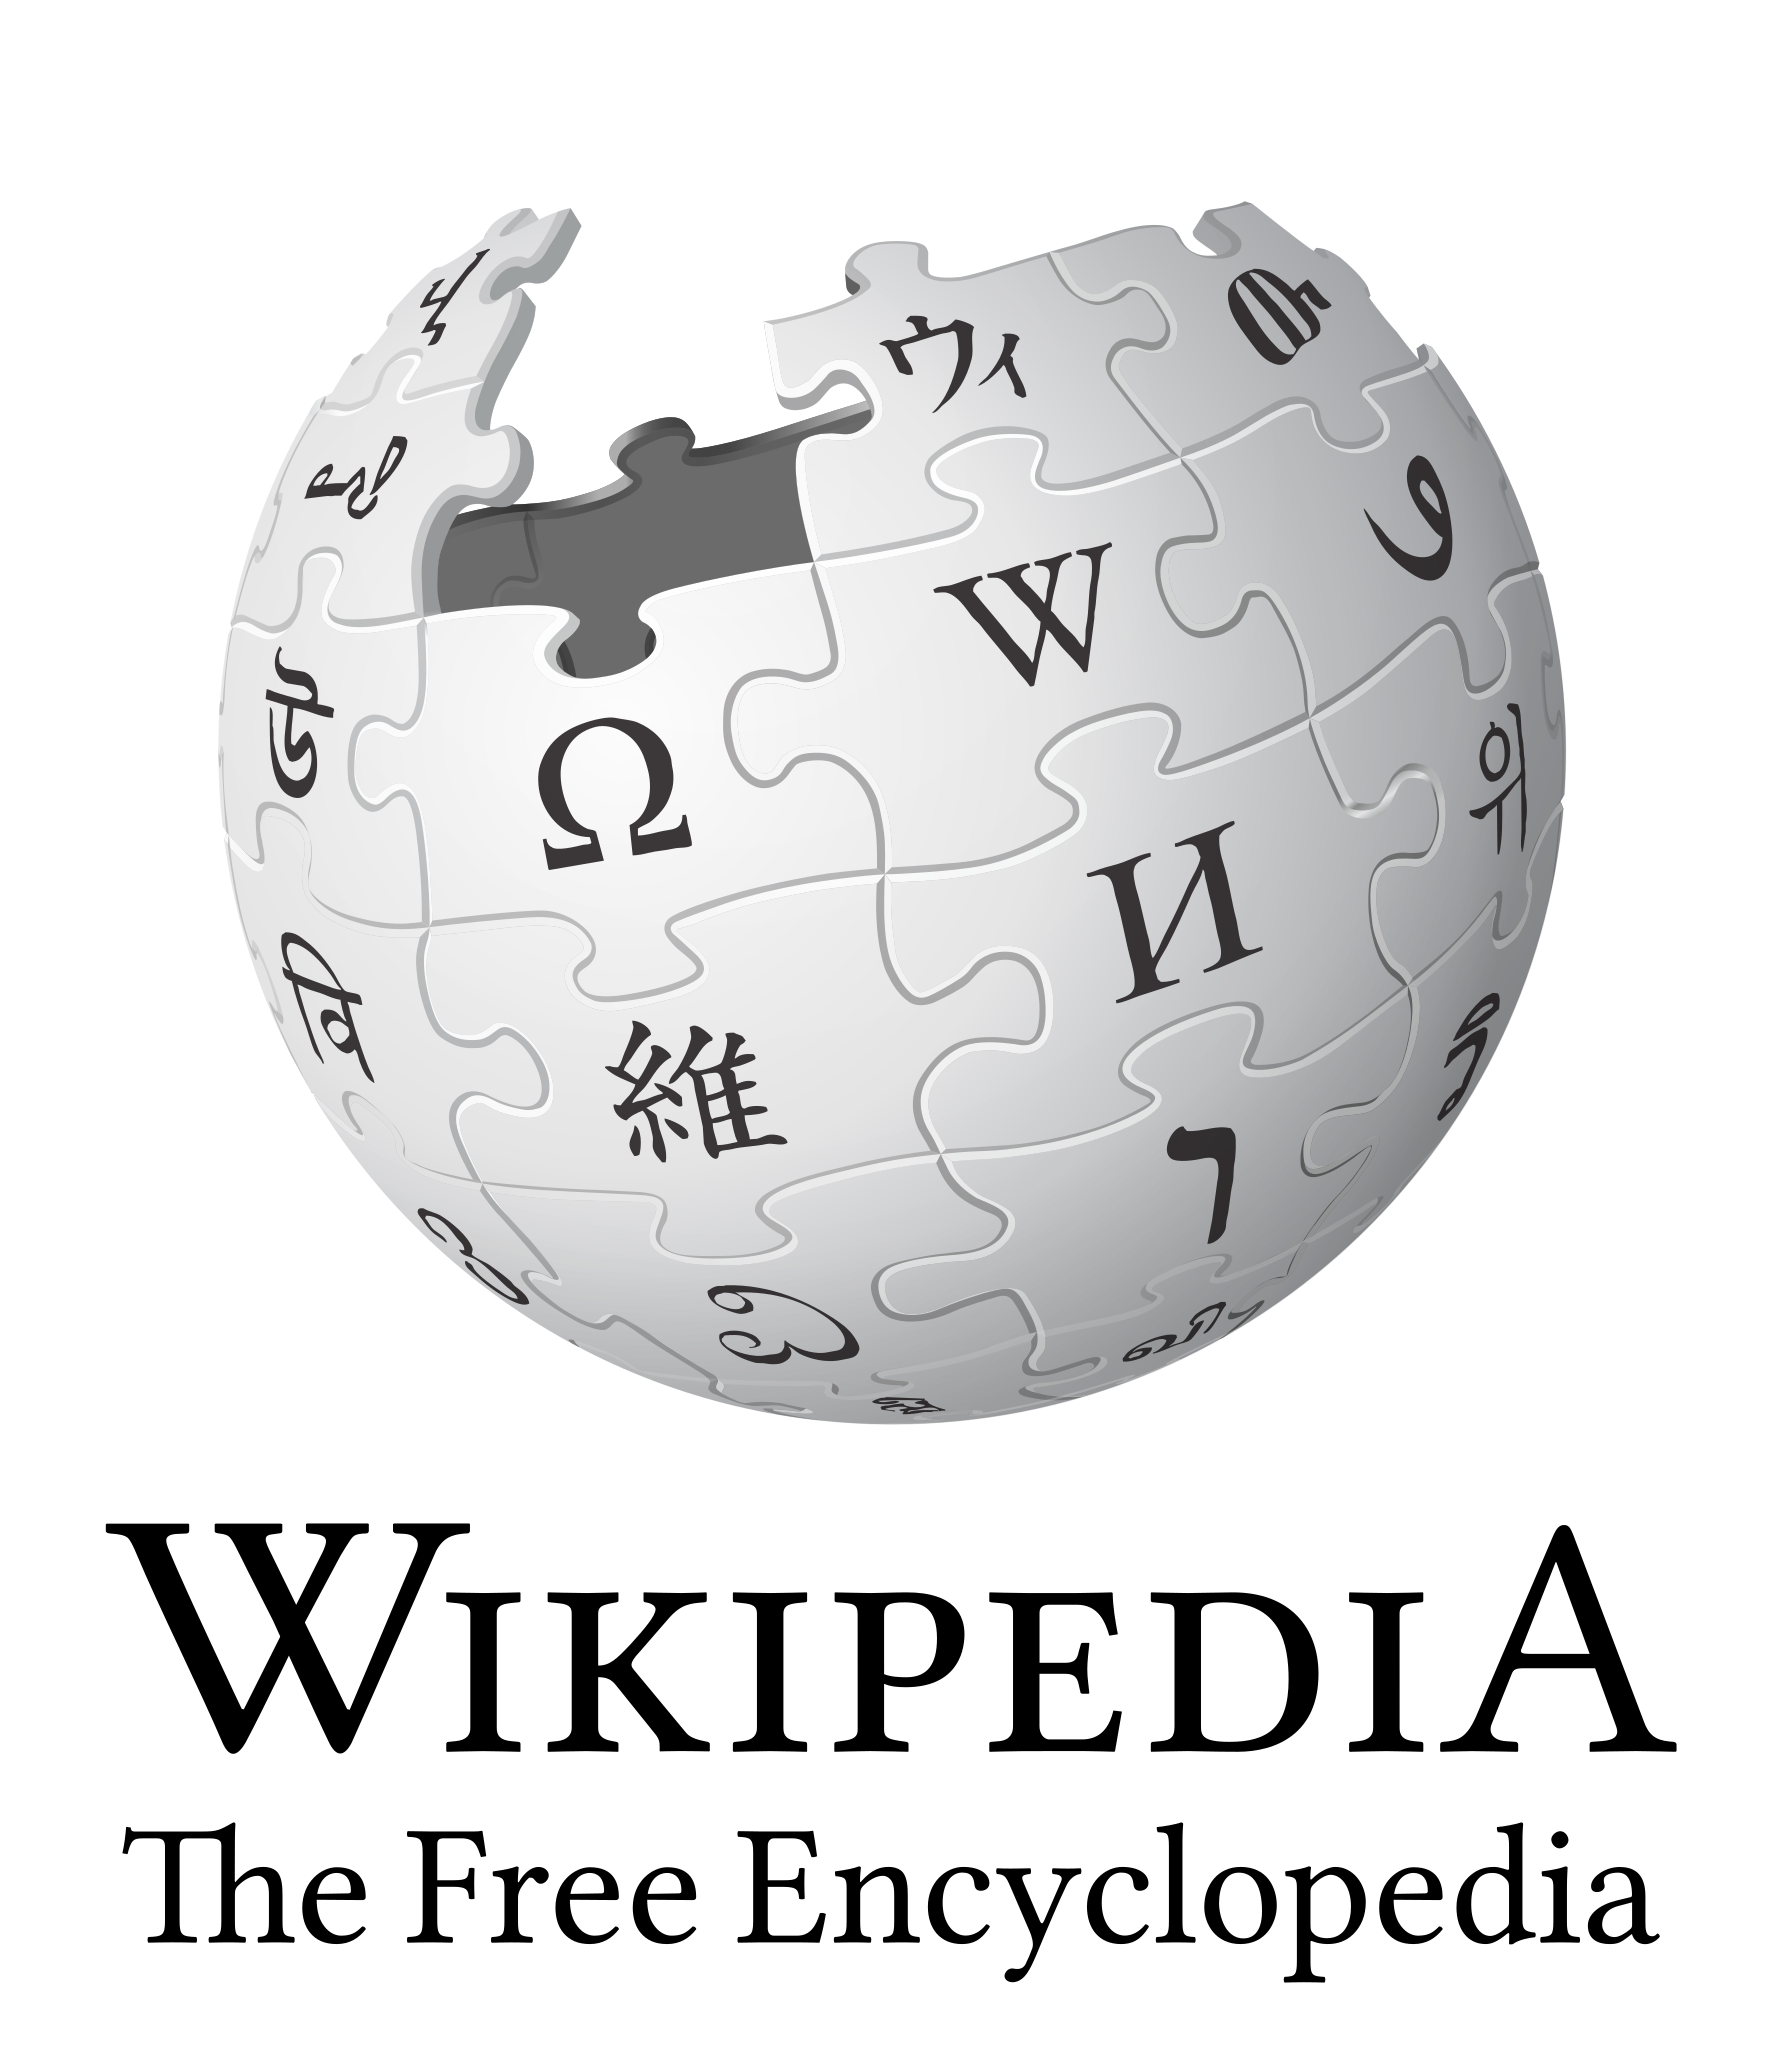 File:Oakley logo.svg - Wikipedia